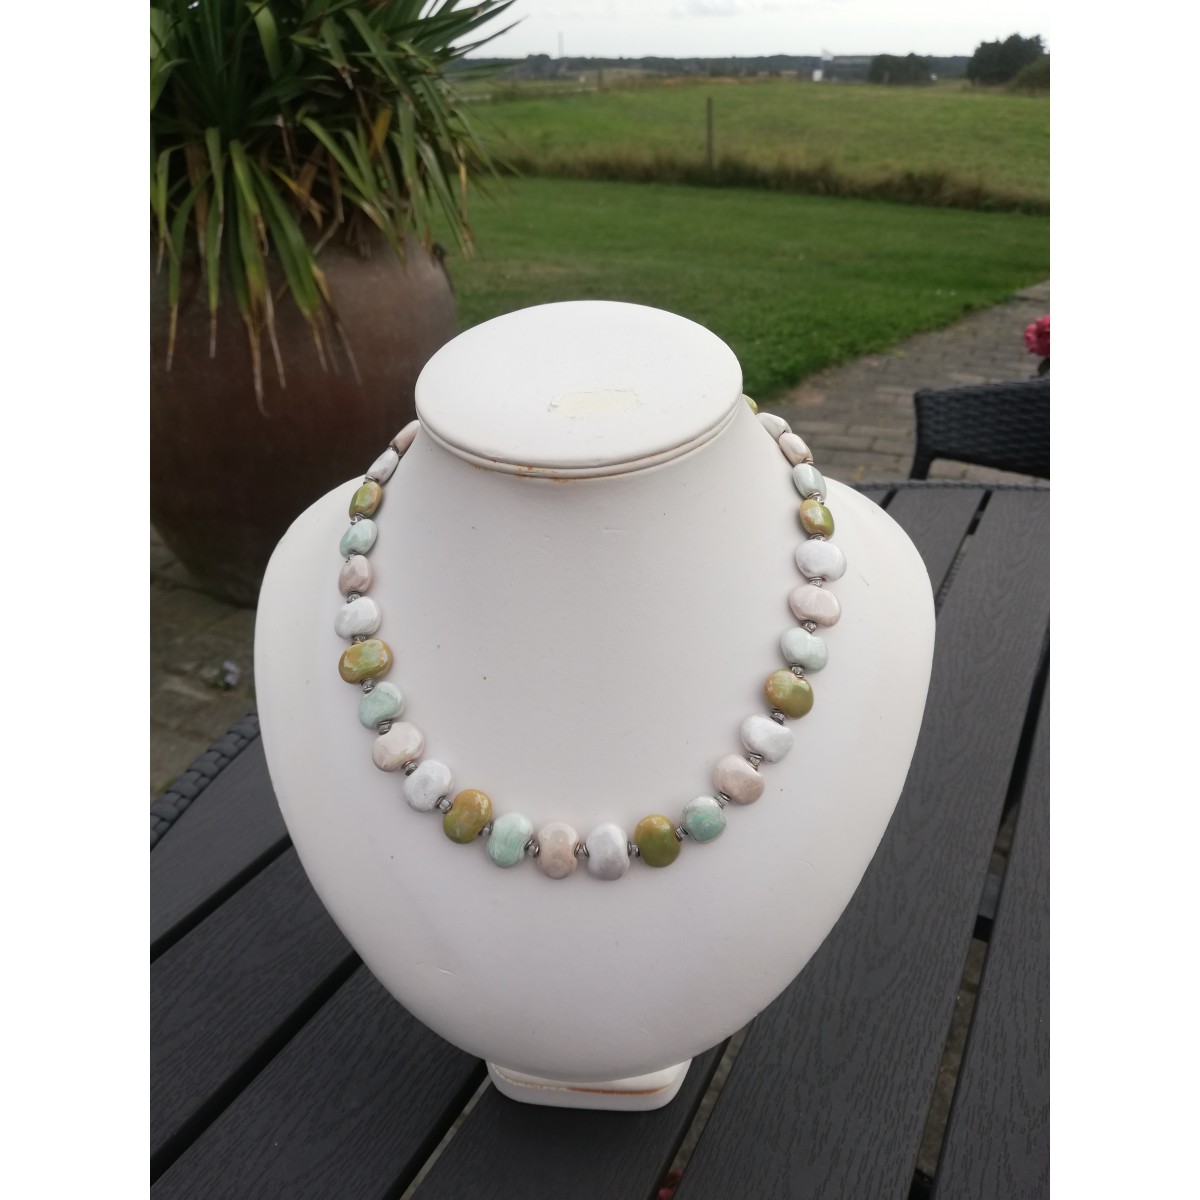 Smuk og Kazuri halskæde håndlavede keramik perler fra Kenya